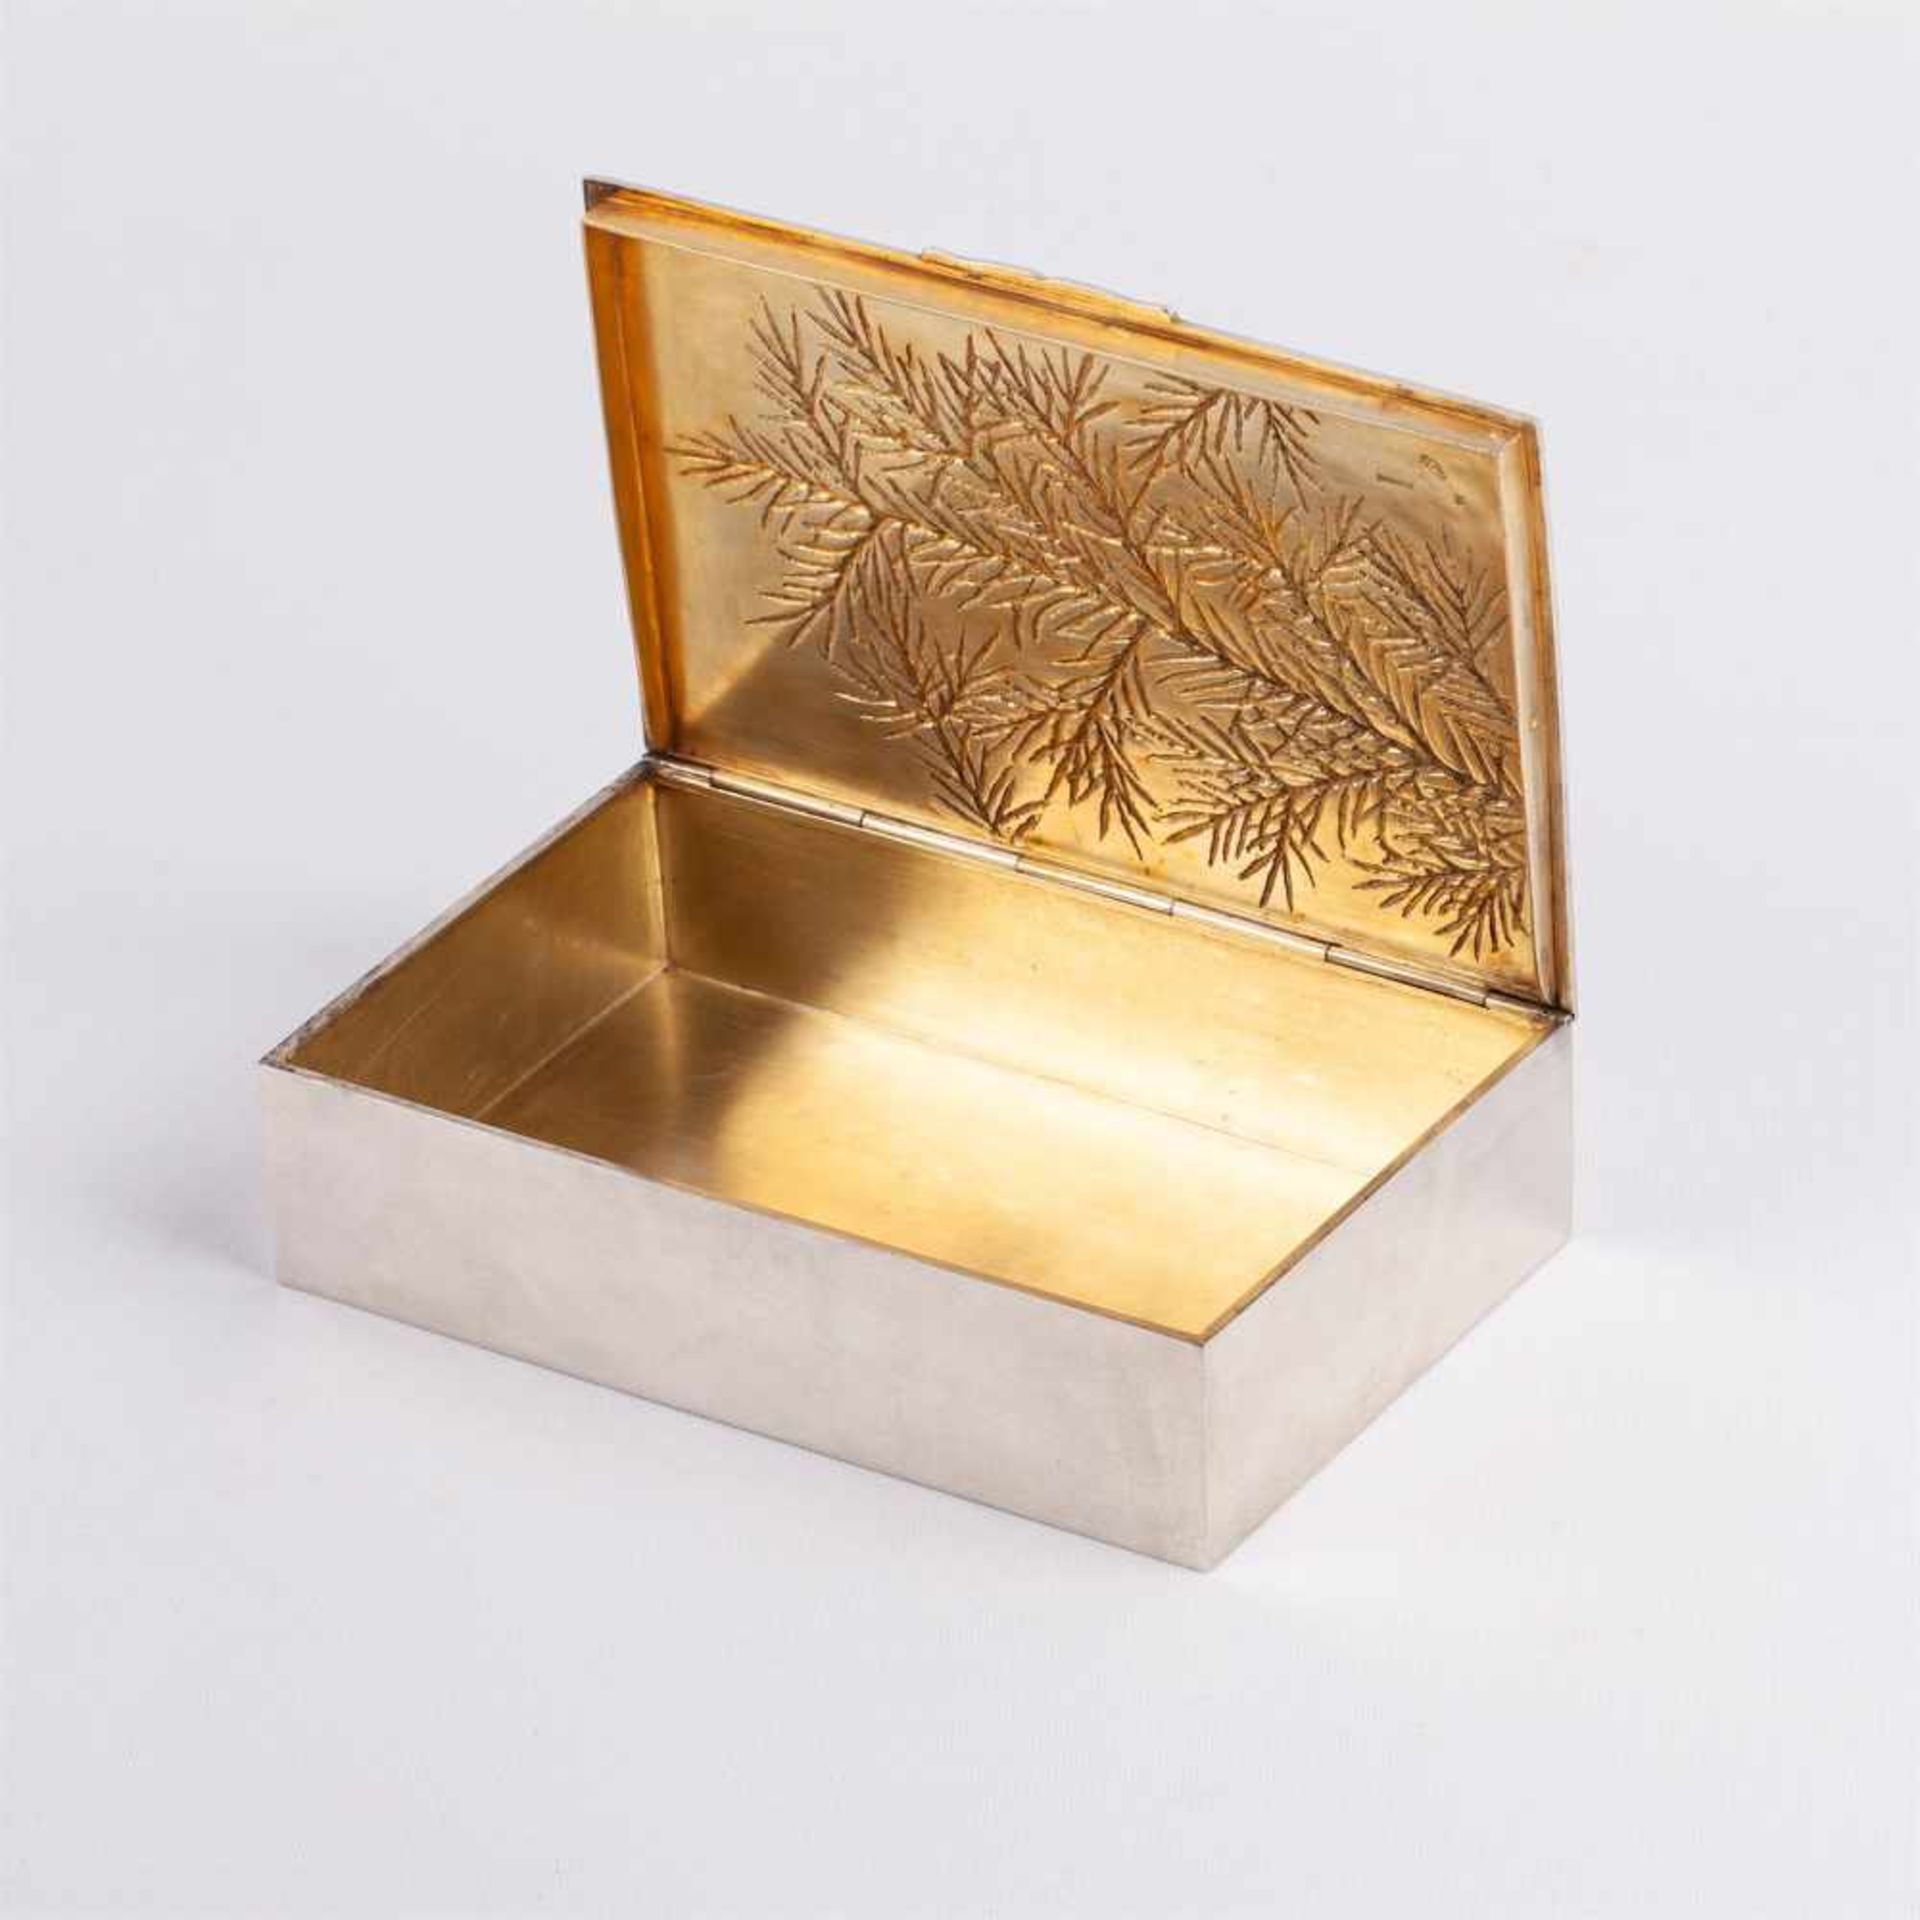 A Russian silver-gilt cigar box. MorozovA Russian silver-gilt cigar box with a floral decoration. - Image 2 of 6